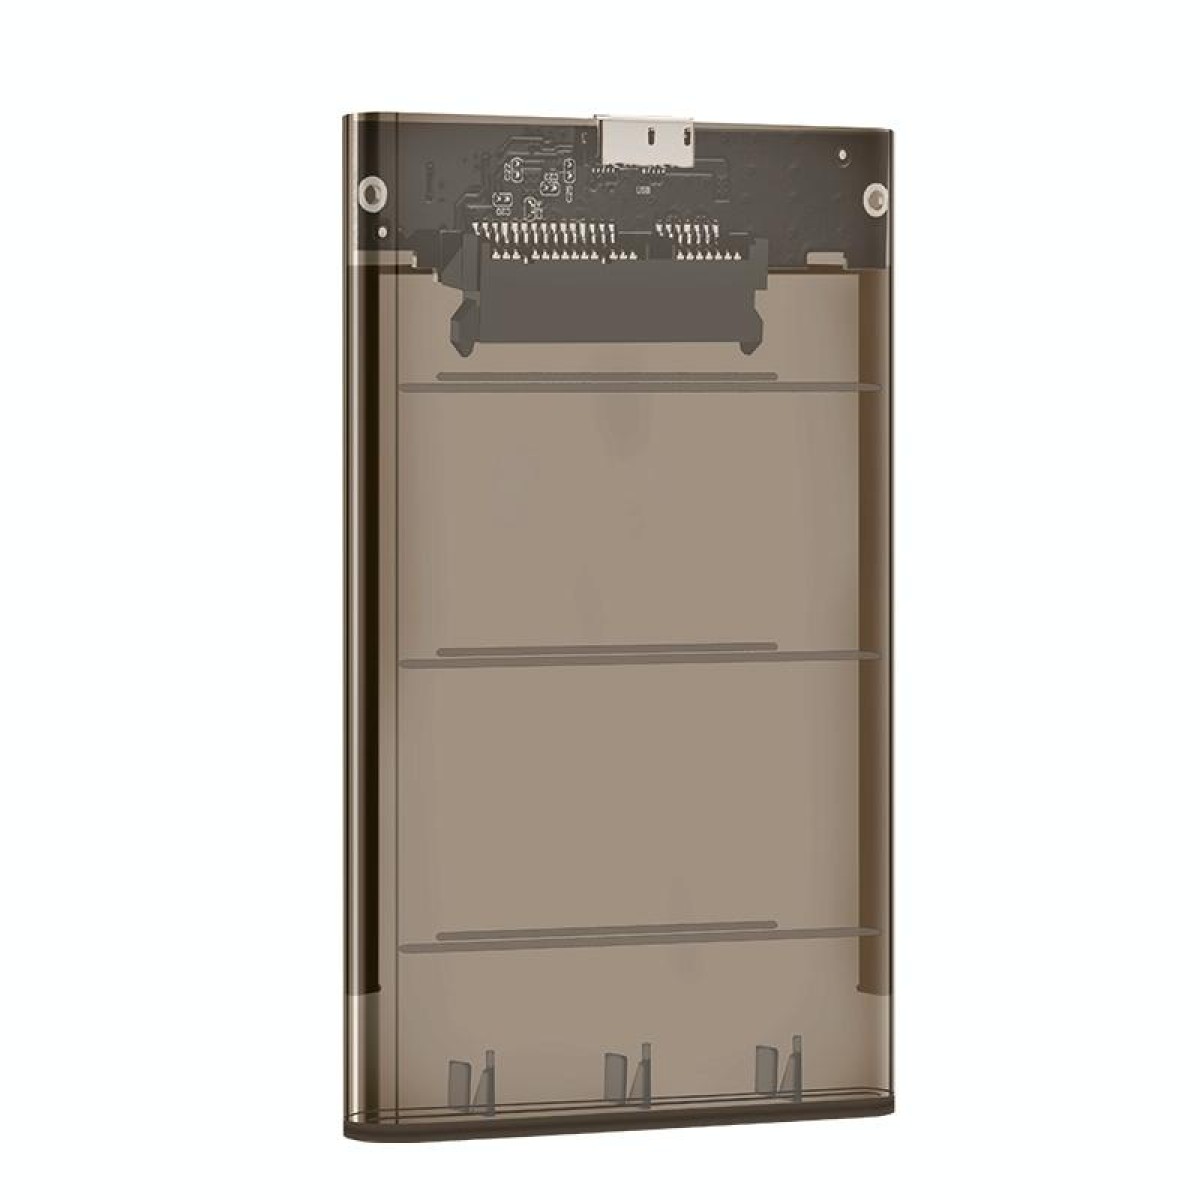 SATA3 to USB Mobile Hard Disk Box Hard Drive Enclosure(Dark Brown)